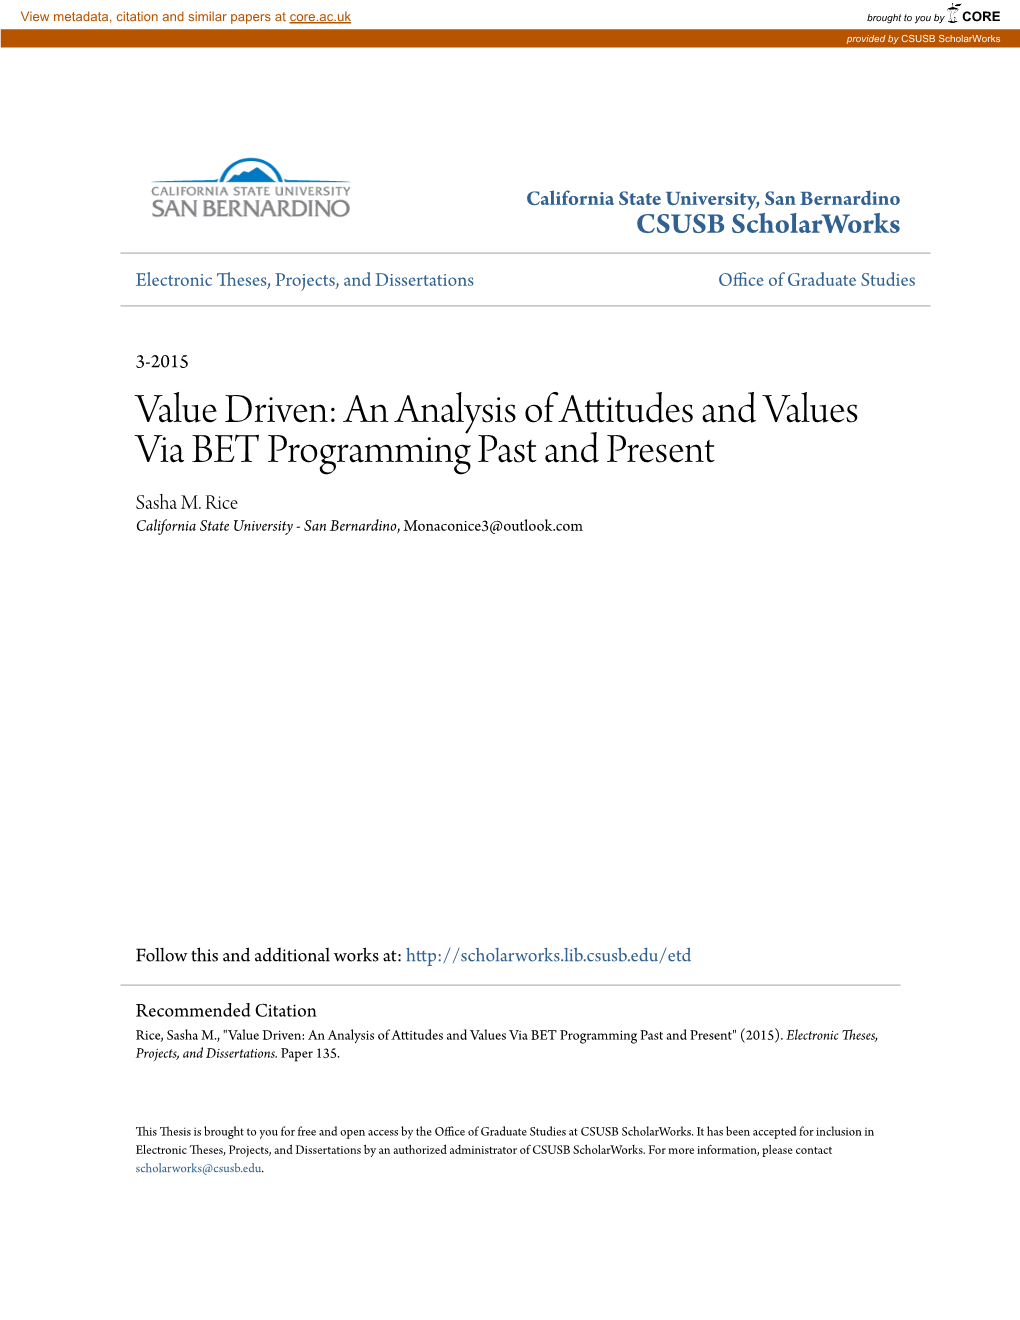 An Analysis of Attitudes and Values Via BET Programming Past and Present Sasha M